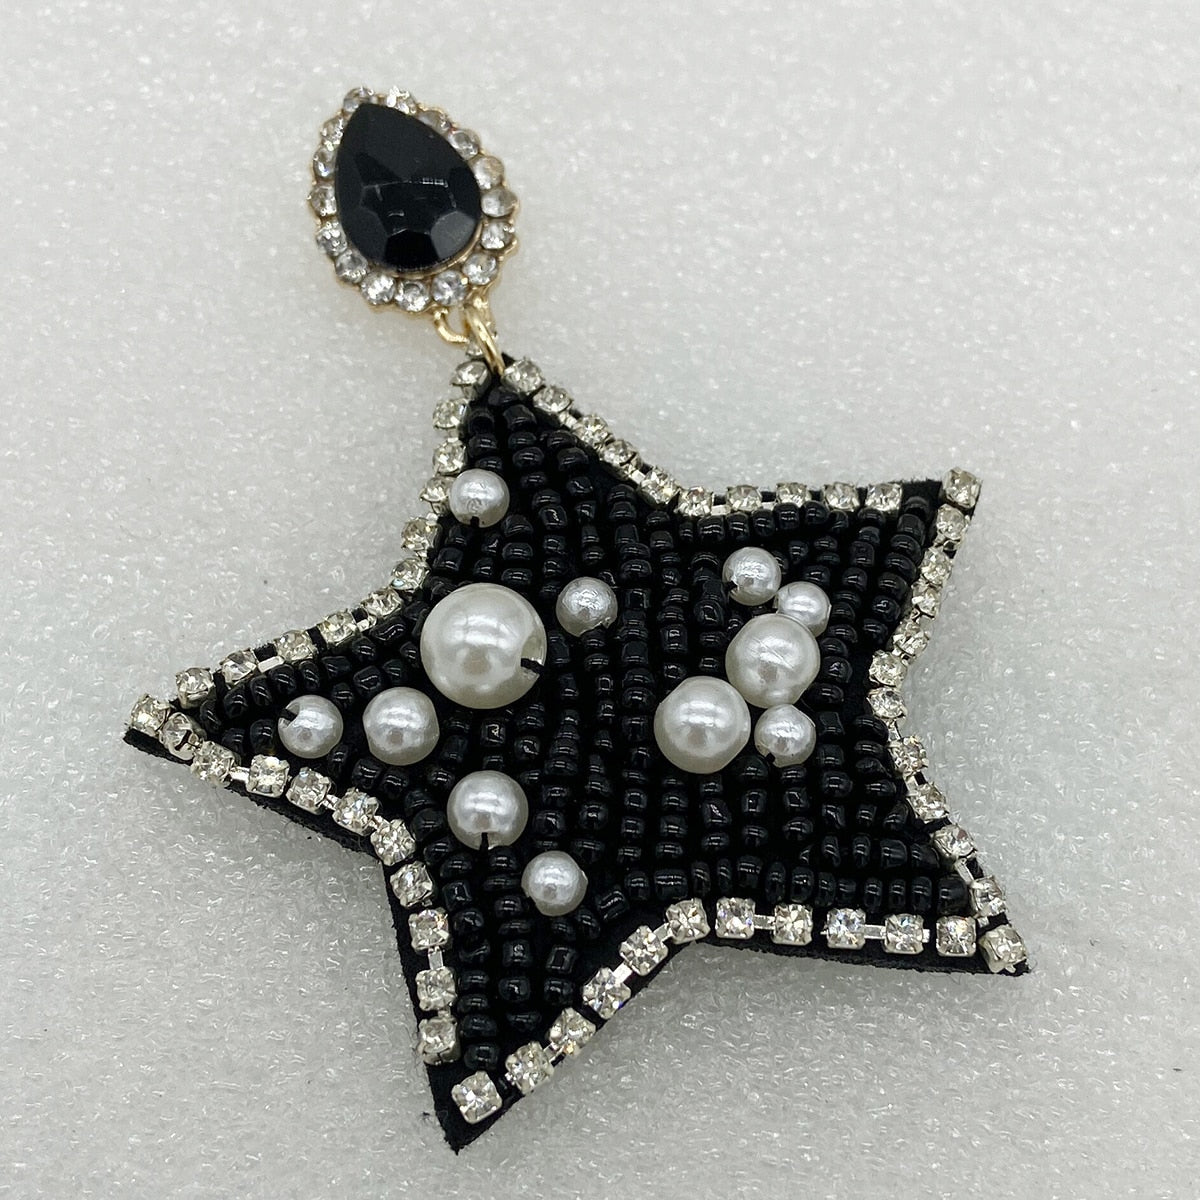 Bohemian Handmade Glass Beads Five Star Dangle Earrings for Women